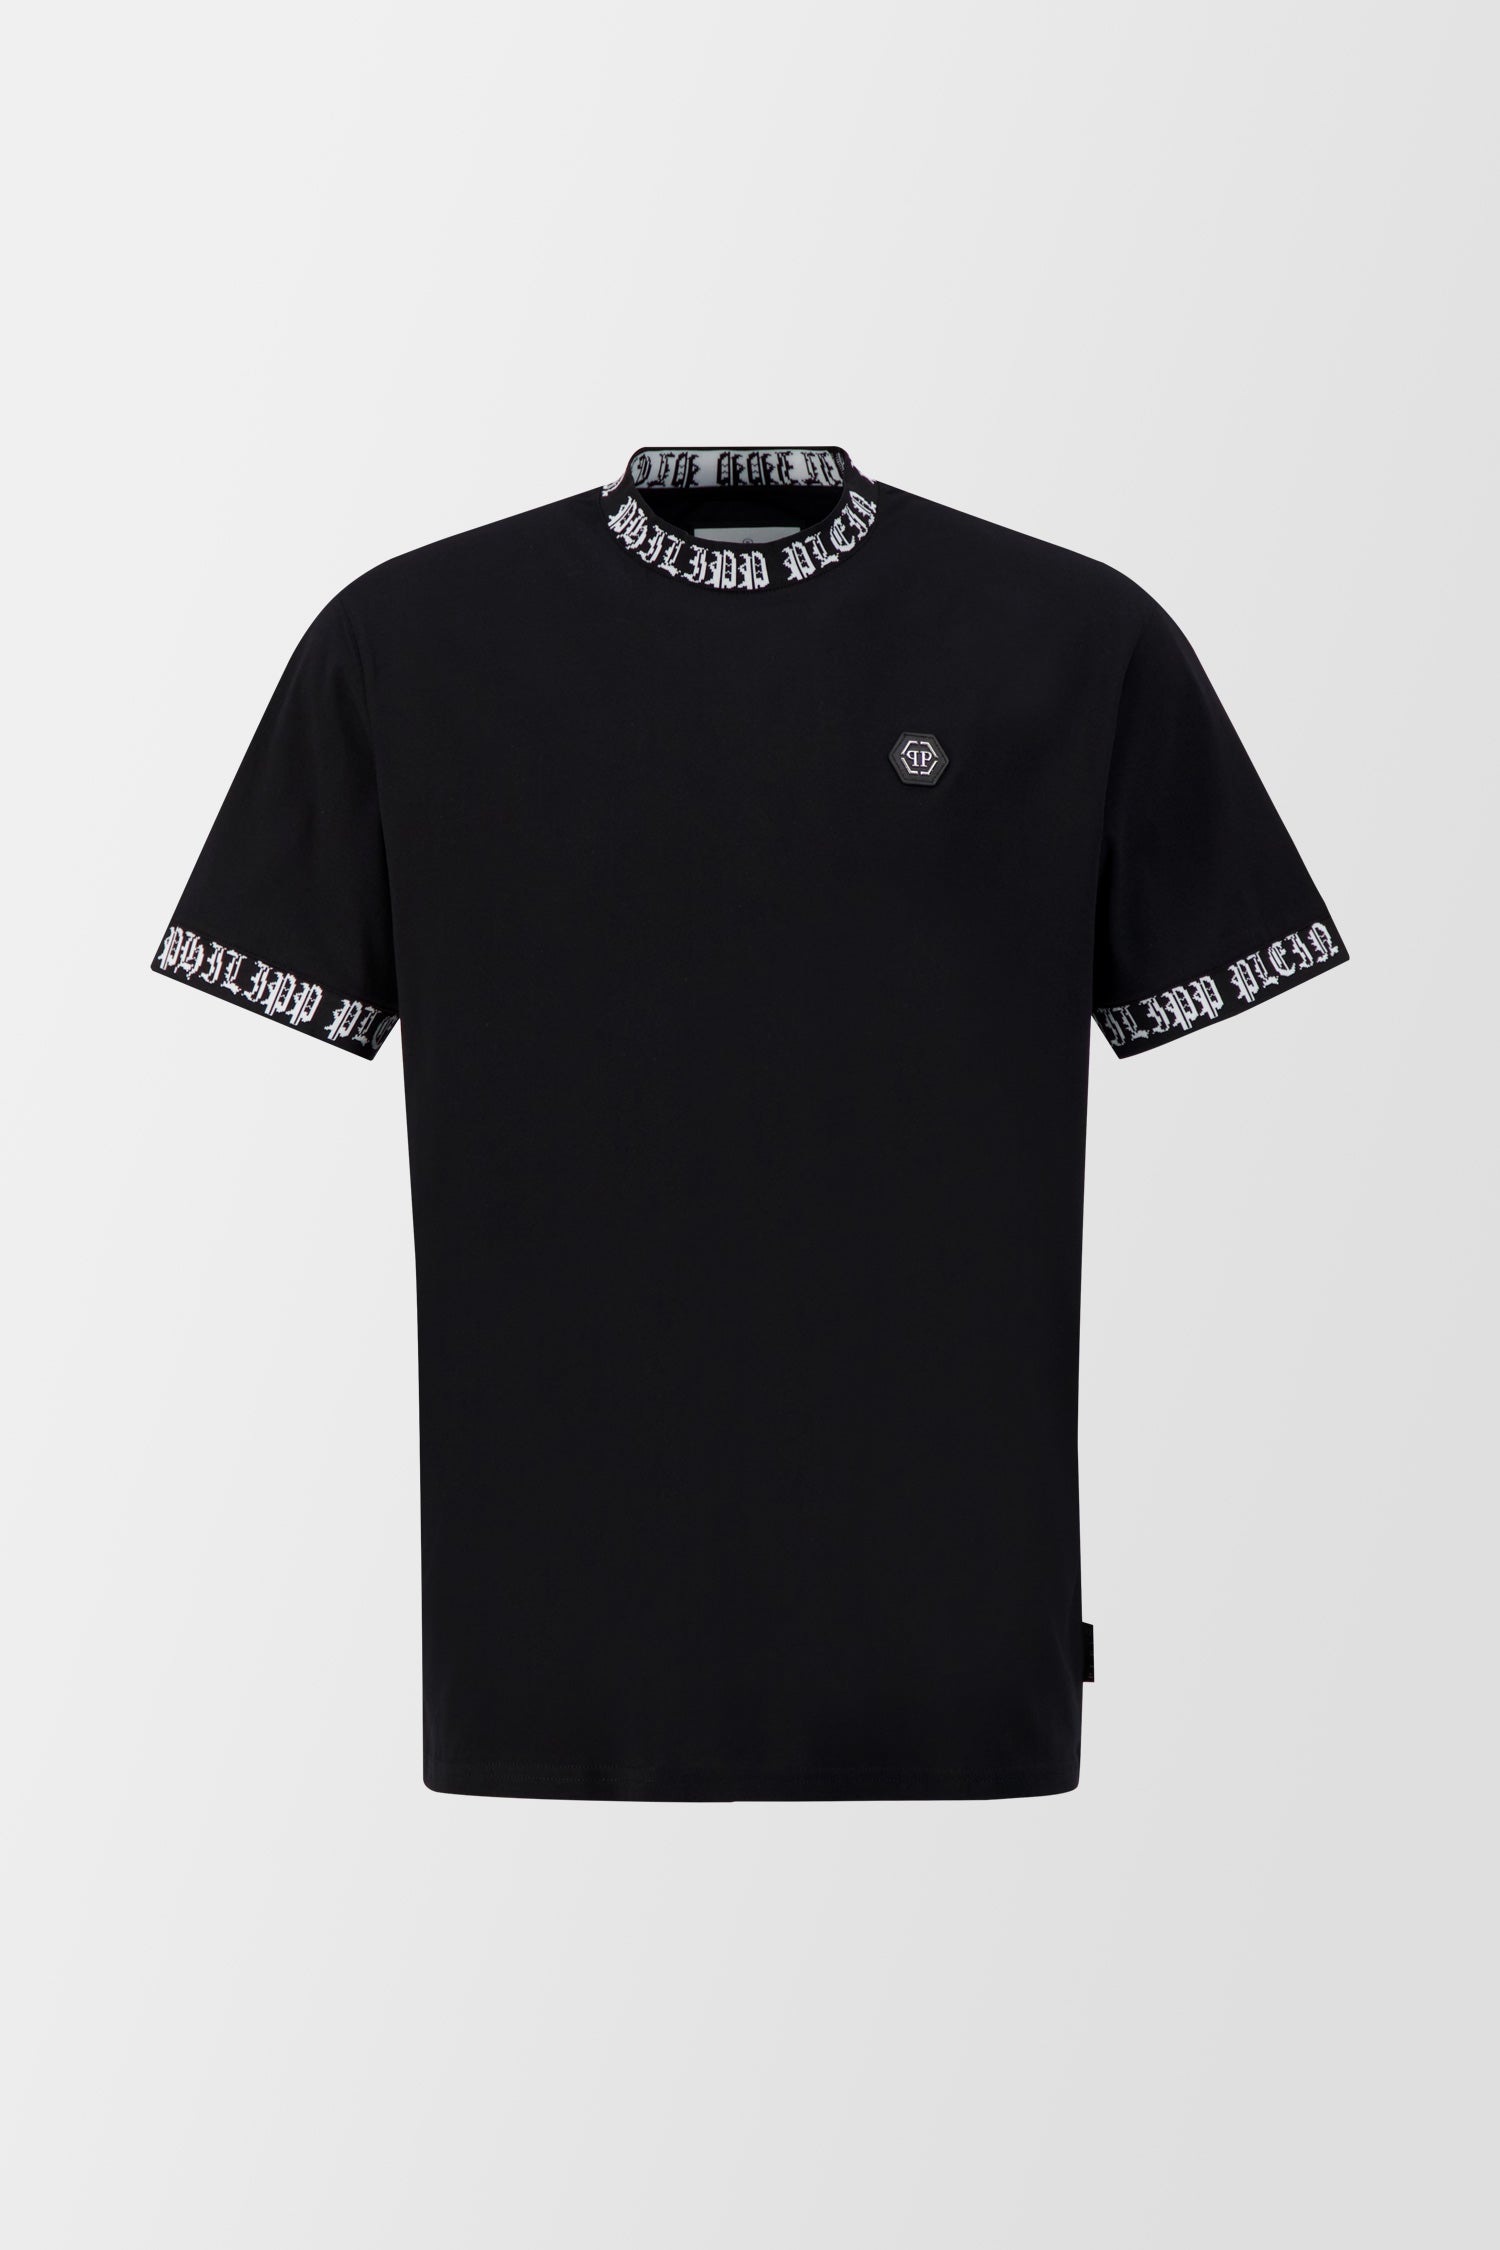 Philipp Plein Black/White Round Neck T-Shirt